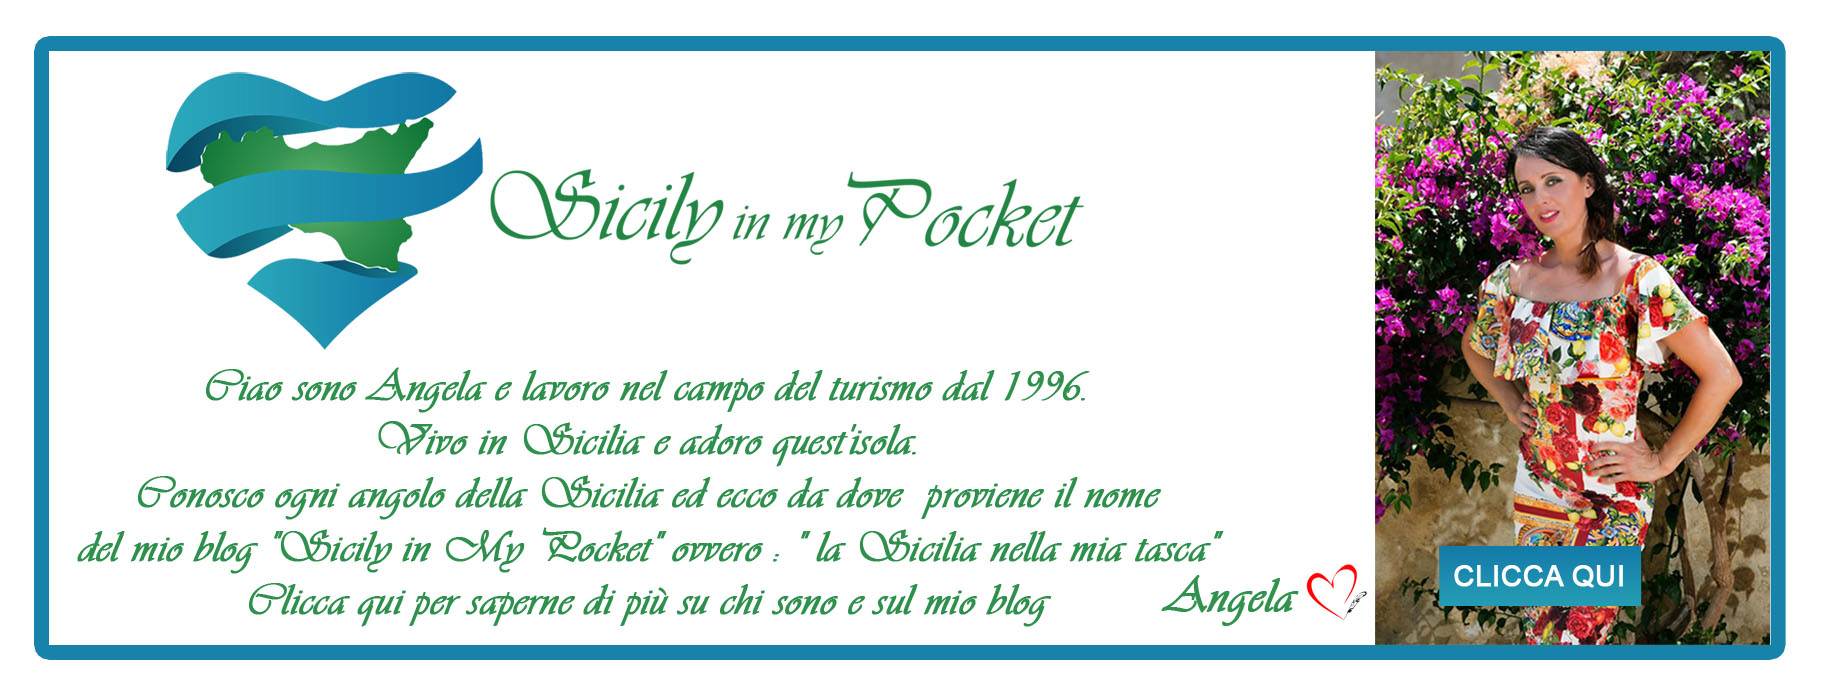 (c) Sicilyinmypocket.com